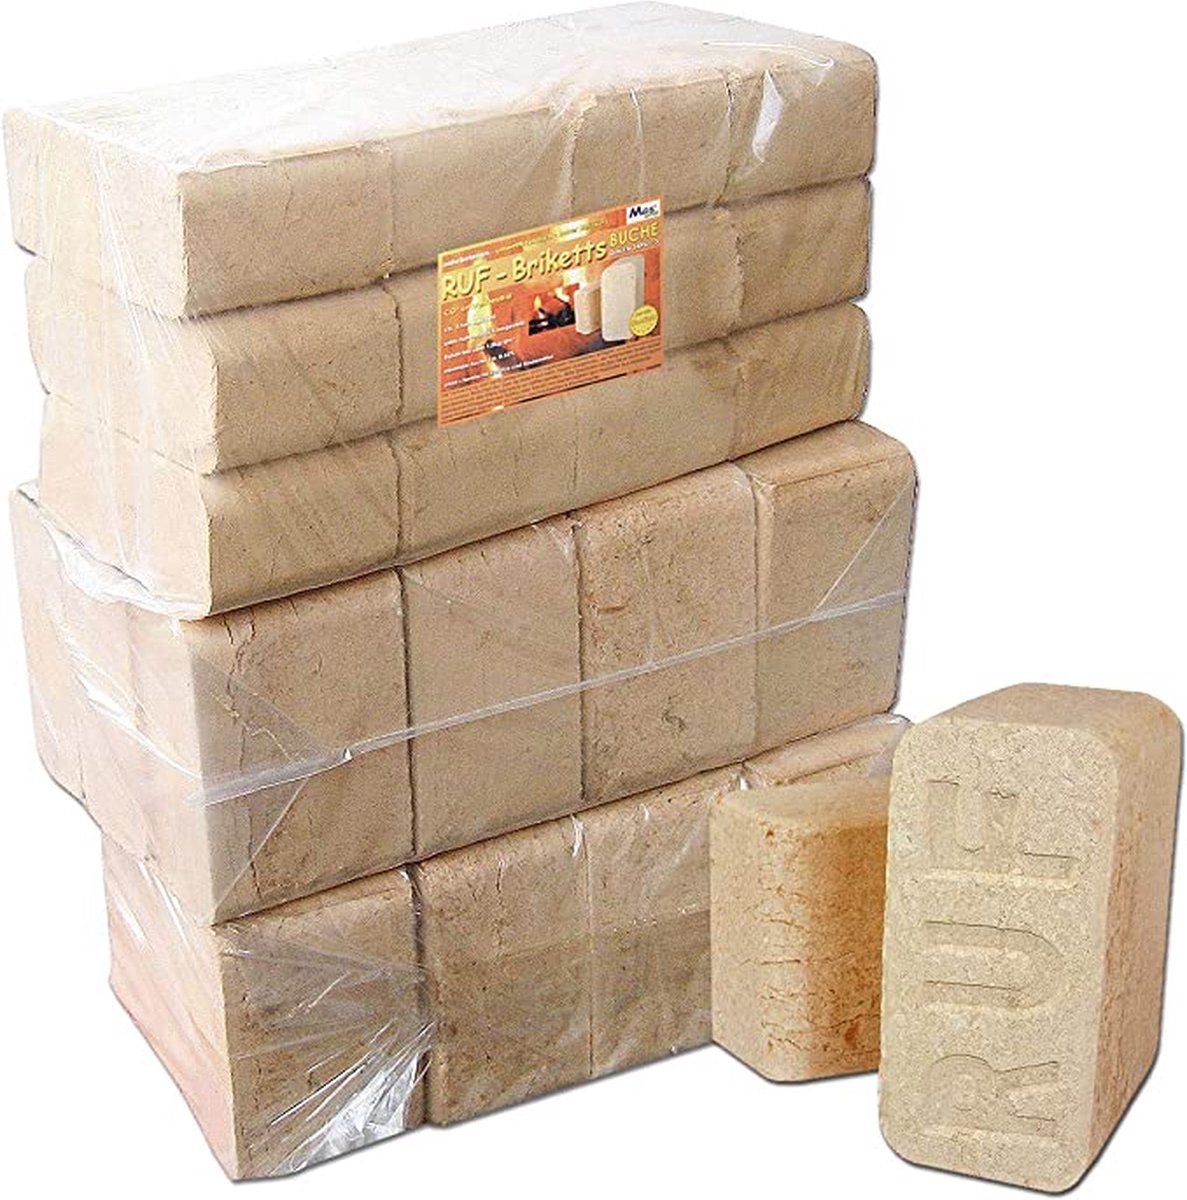 RUF Briketten - hout briketten - brandhout - hout briketten geperst - 10kg - 12briketten (96 pakken)